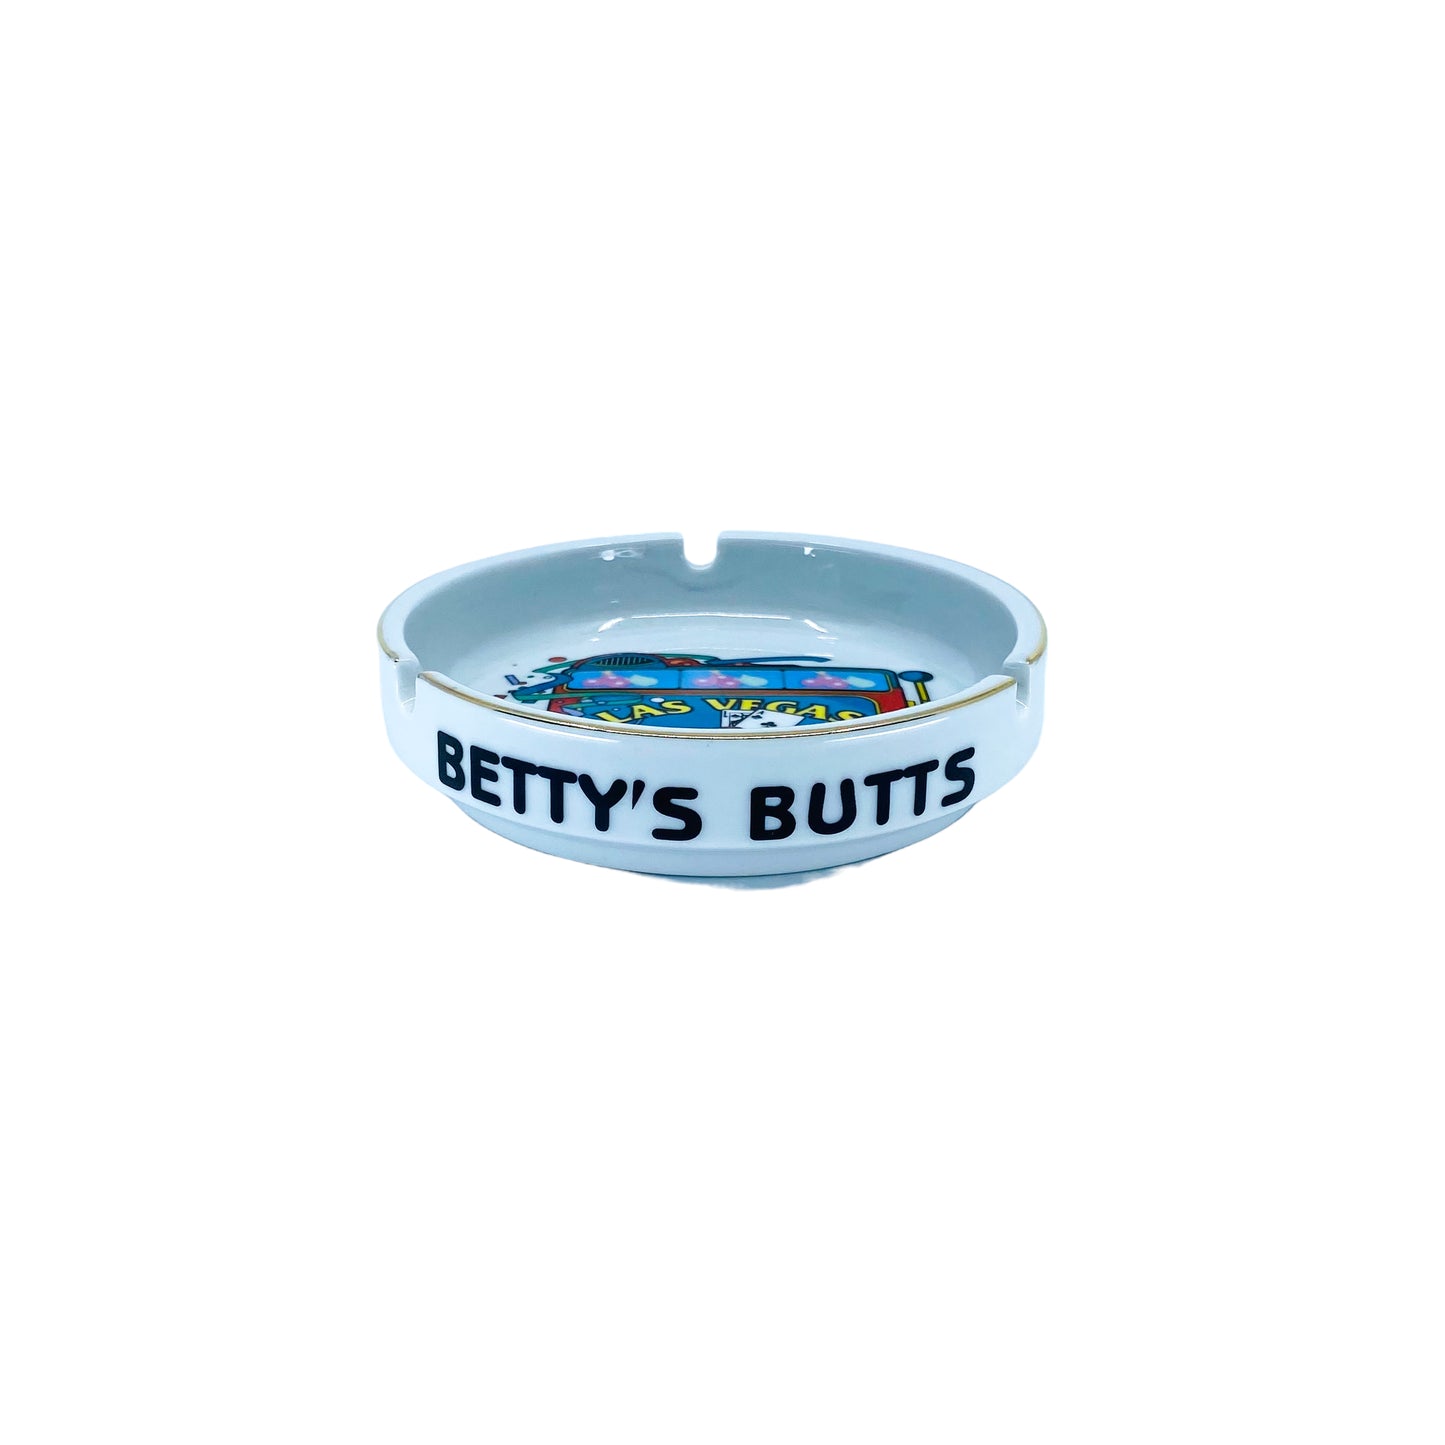 Las Vegas “Betty’s Butts” Ashtray